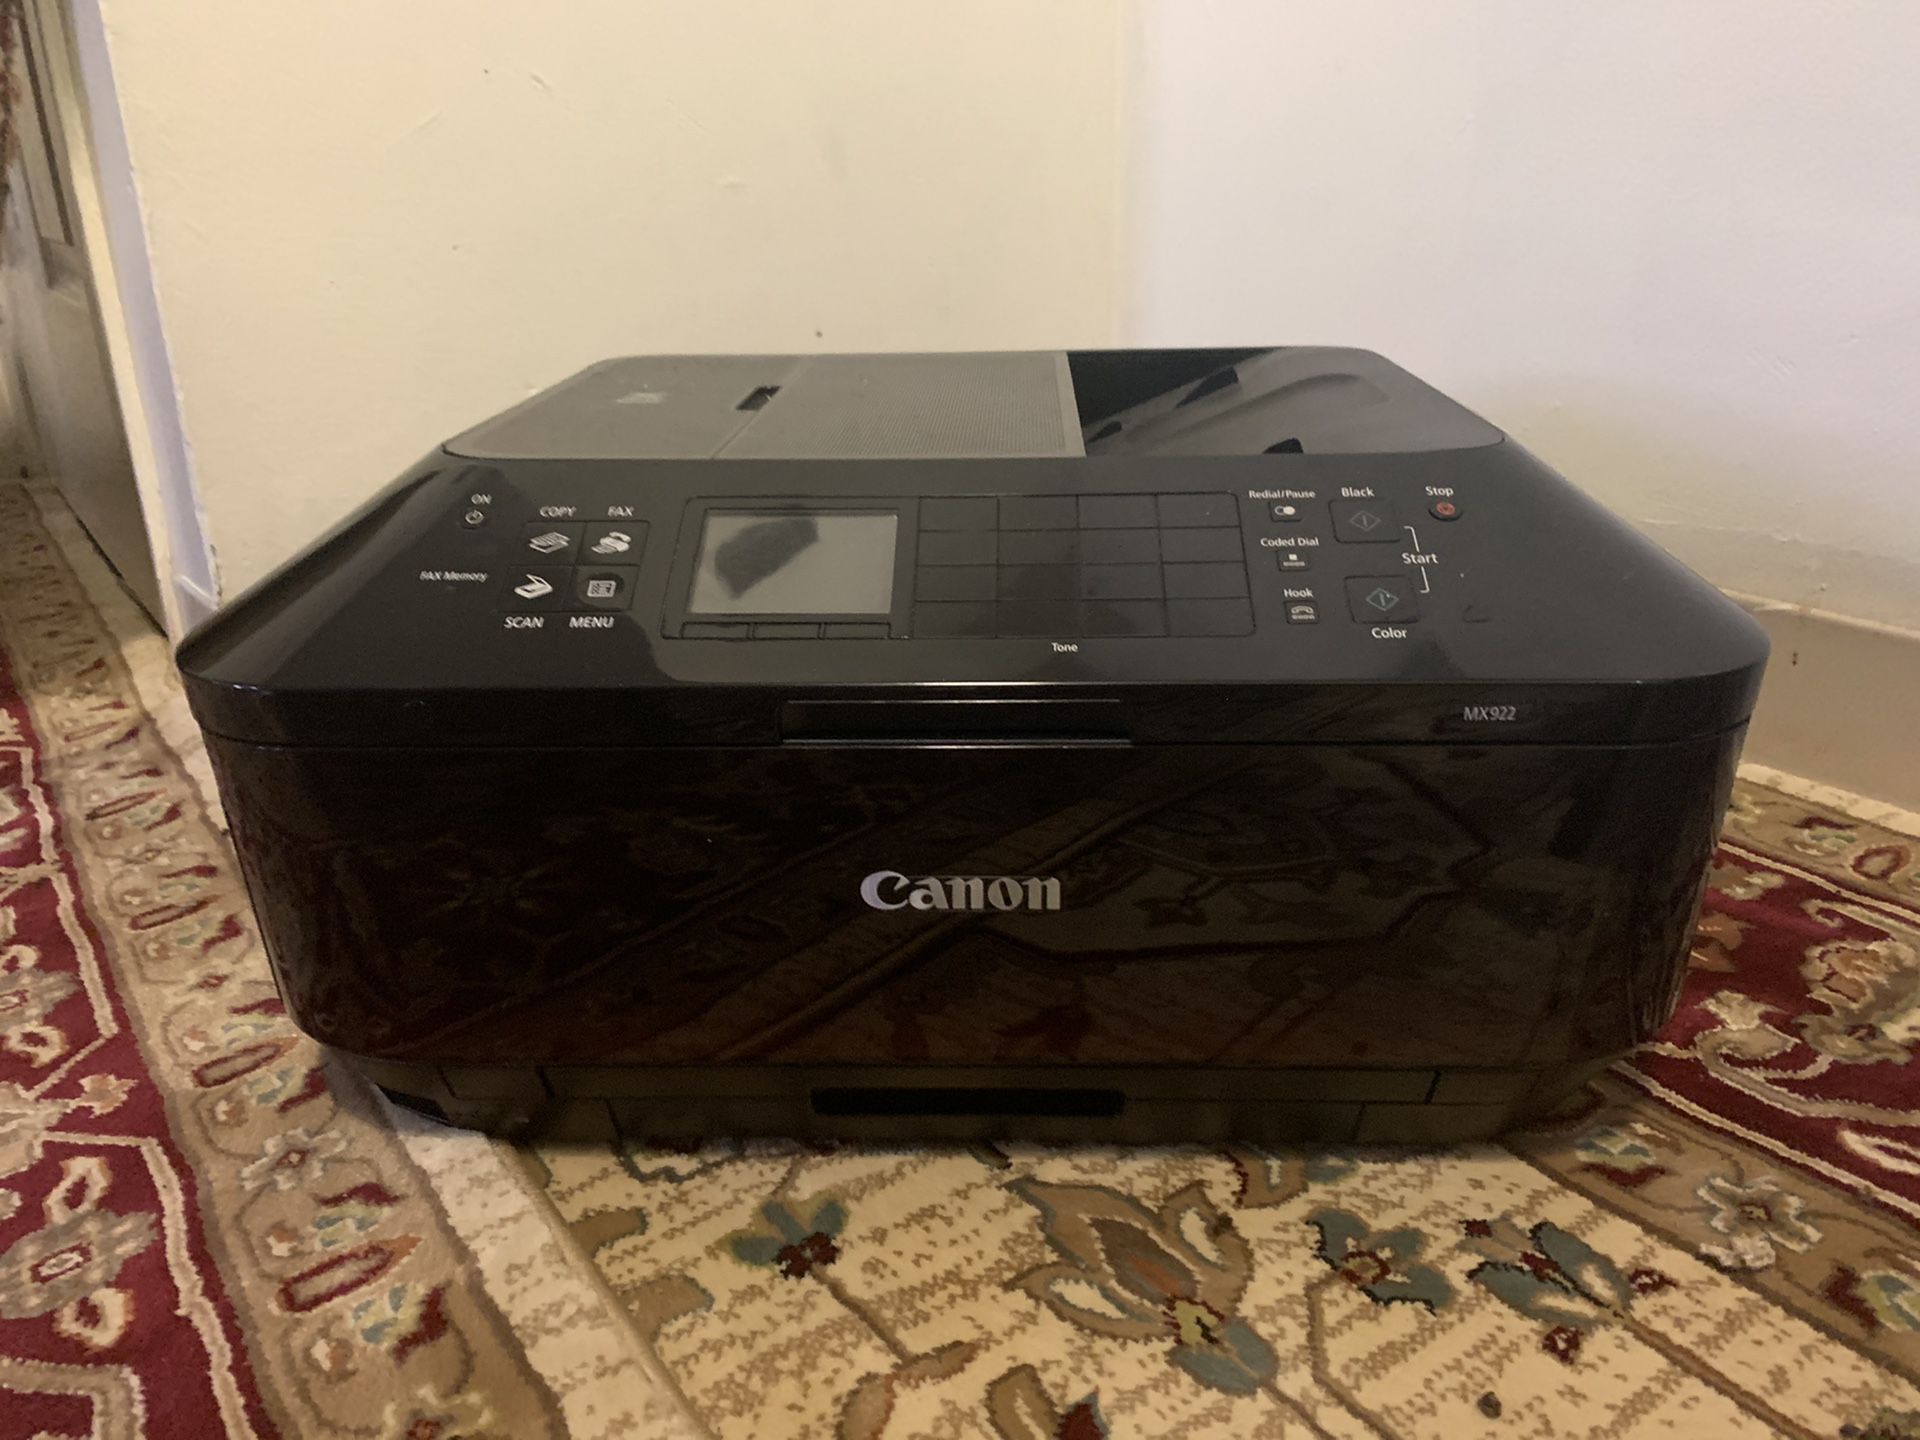 Canon mx922 printer